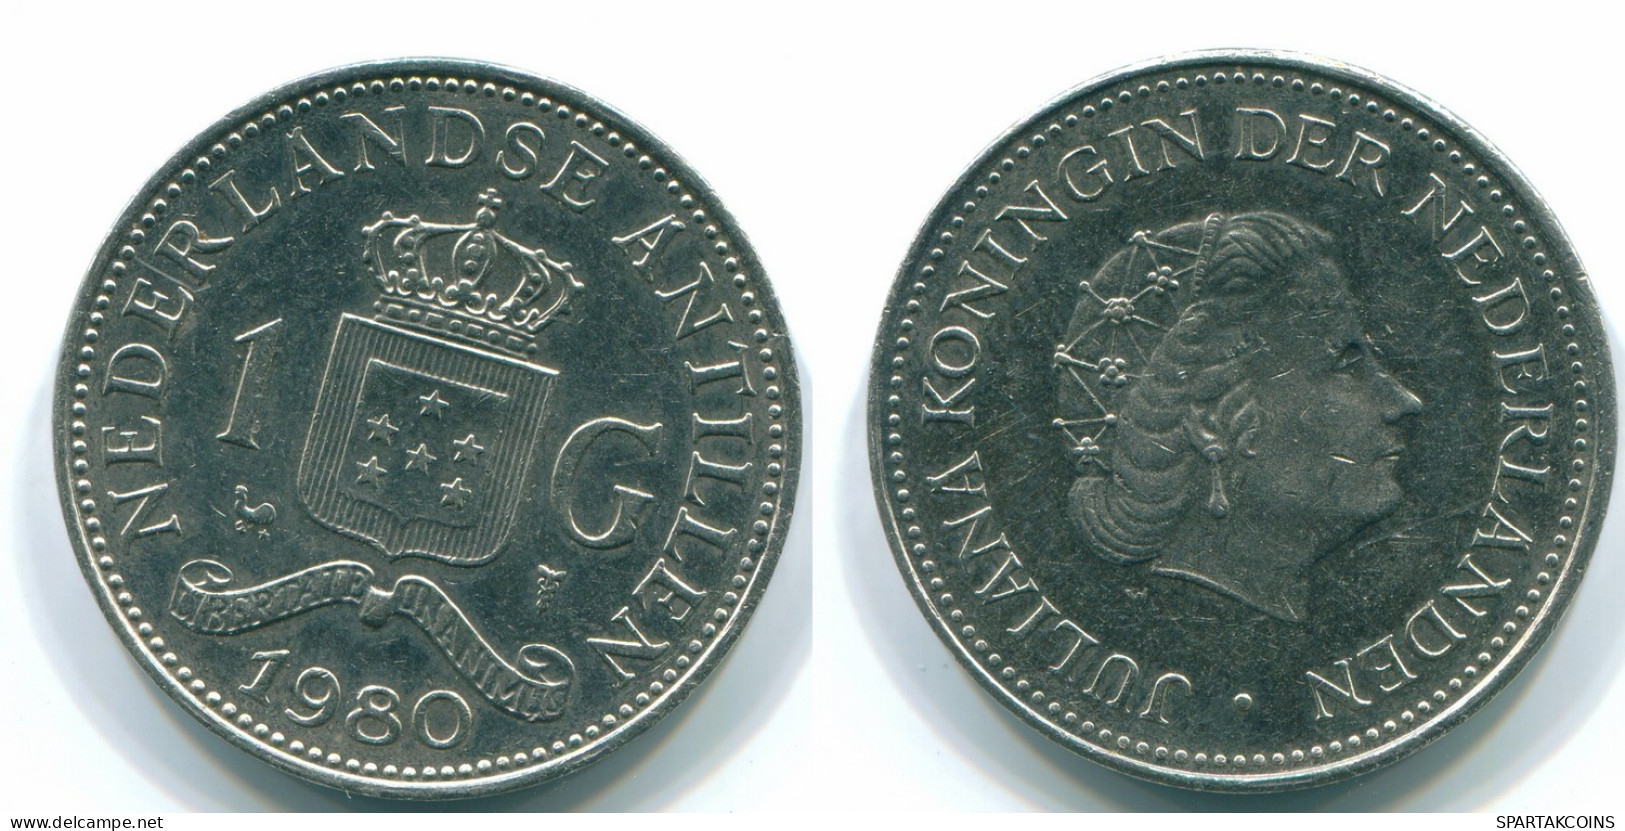 1 GULDEN 1980 NETHERLANDS ANTILLES Nickel Colonial Coin #S12041.U.A - Netherlands Antilles